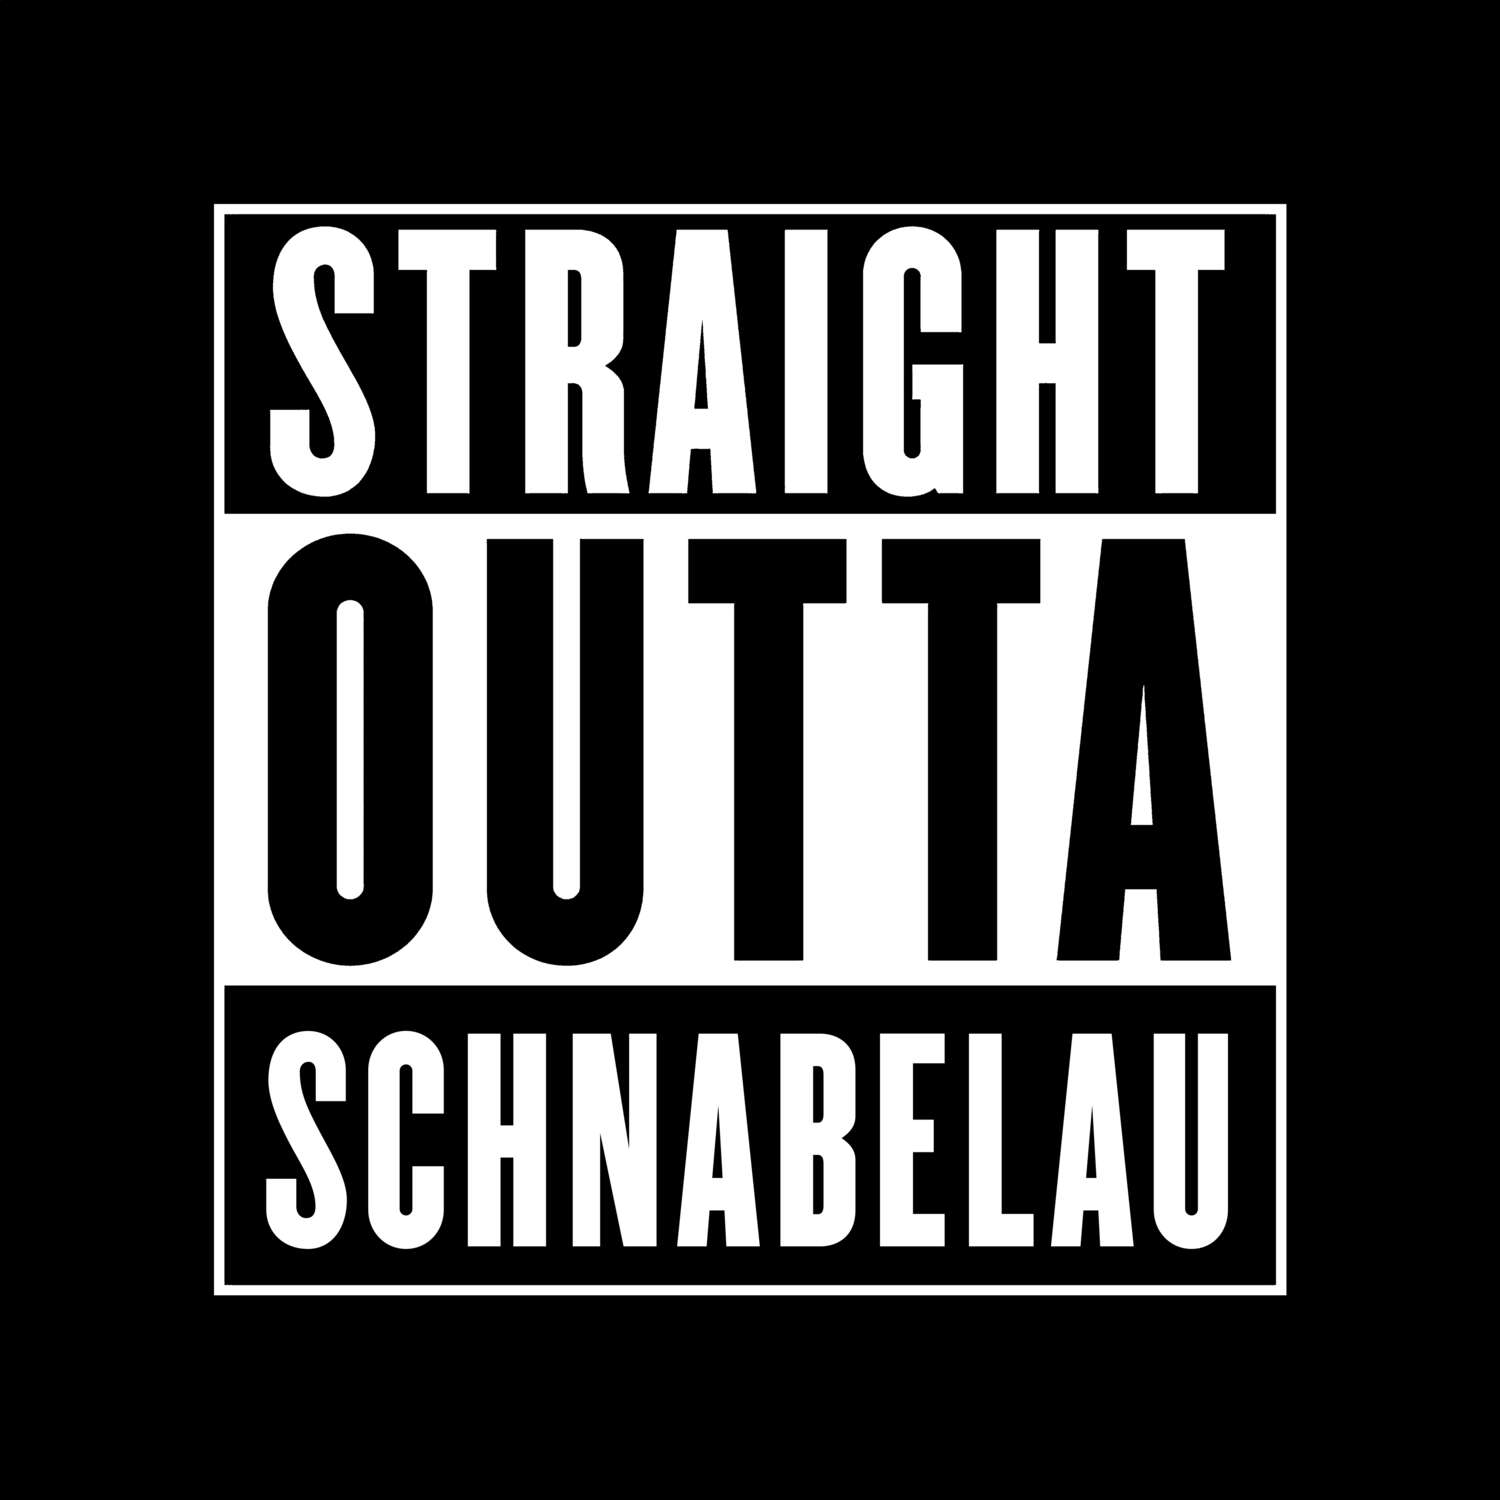 Schnabelau T-Shirt »Straight Outta«